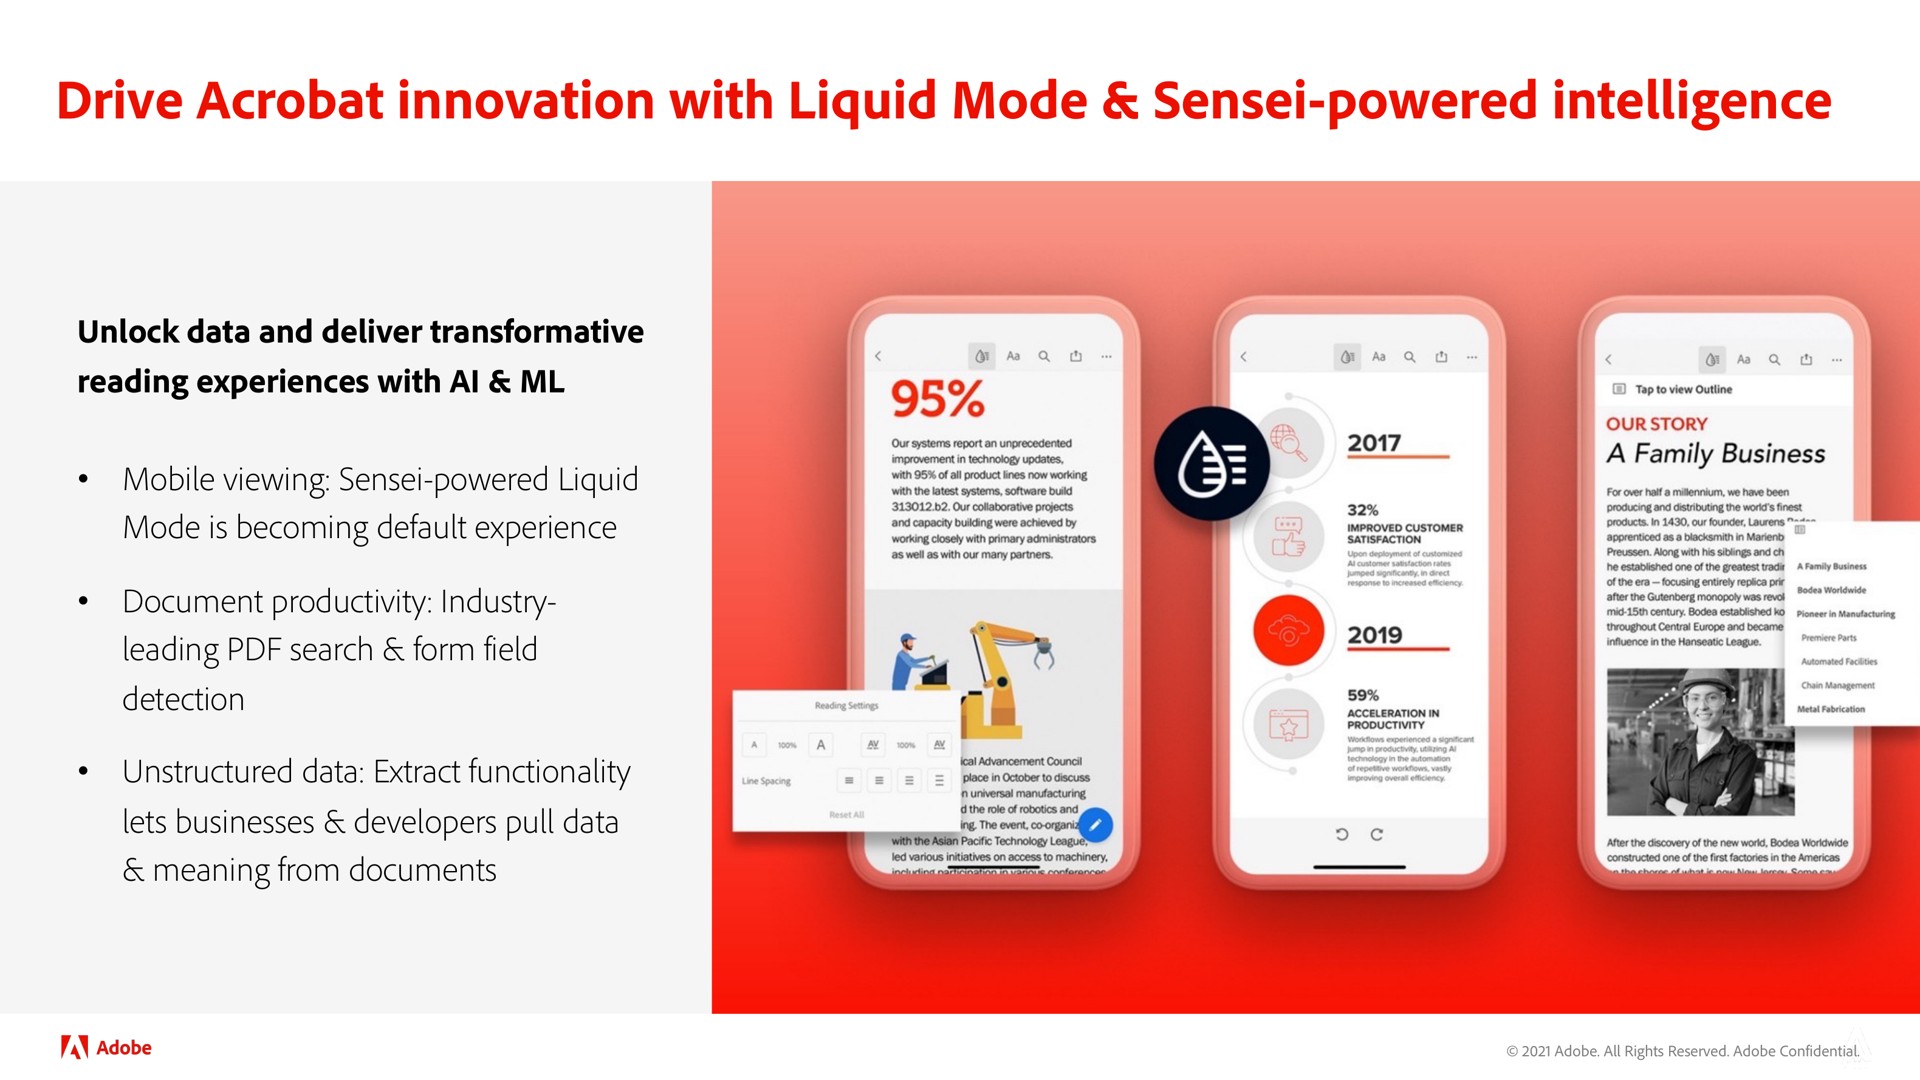 drive acrobat innovation with liquid mode powered intelligence mane | Adobe